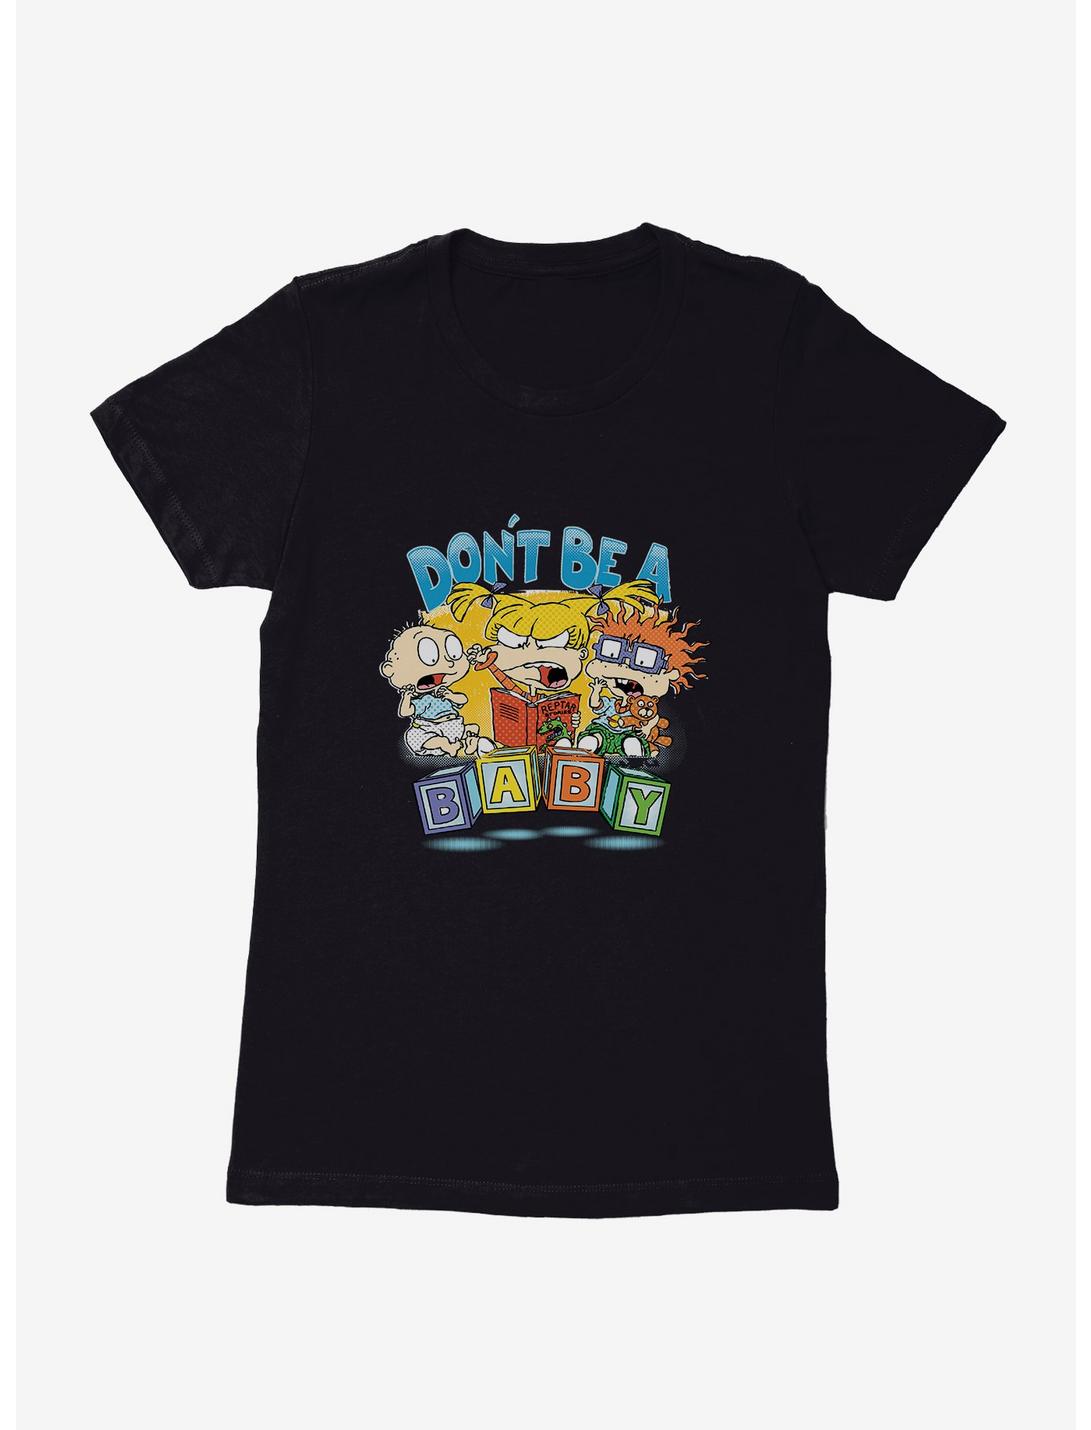 Rugrats Reptar Storytime Womens T-Shirt, BLACK, hi-res